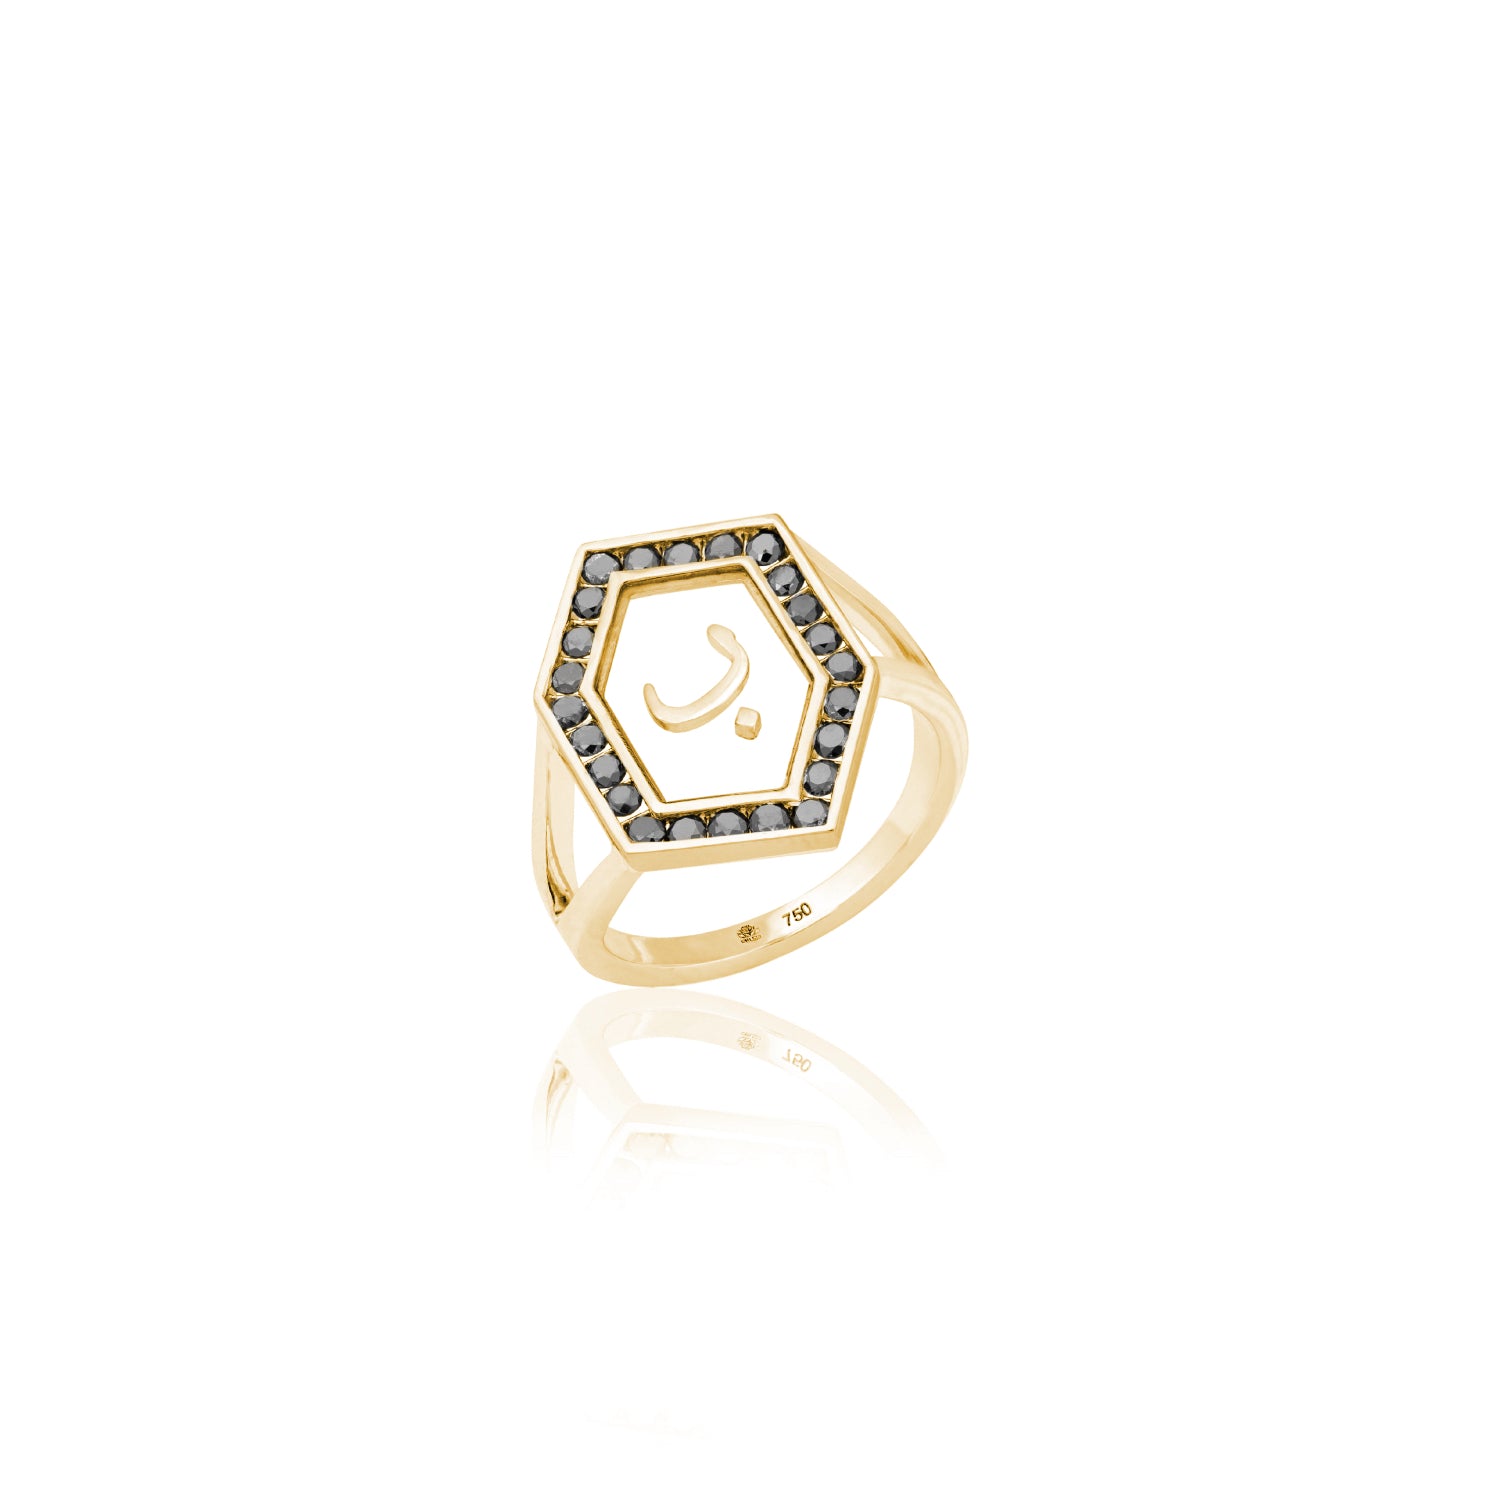 Qamoos 1.0 Letter ب Black Diamond Ring in Yellow Gold